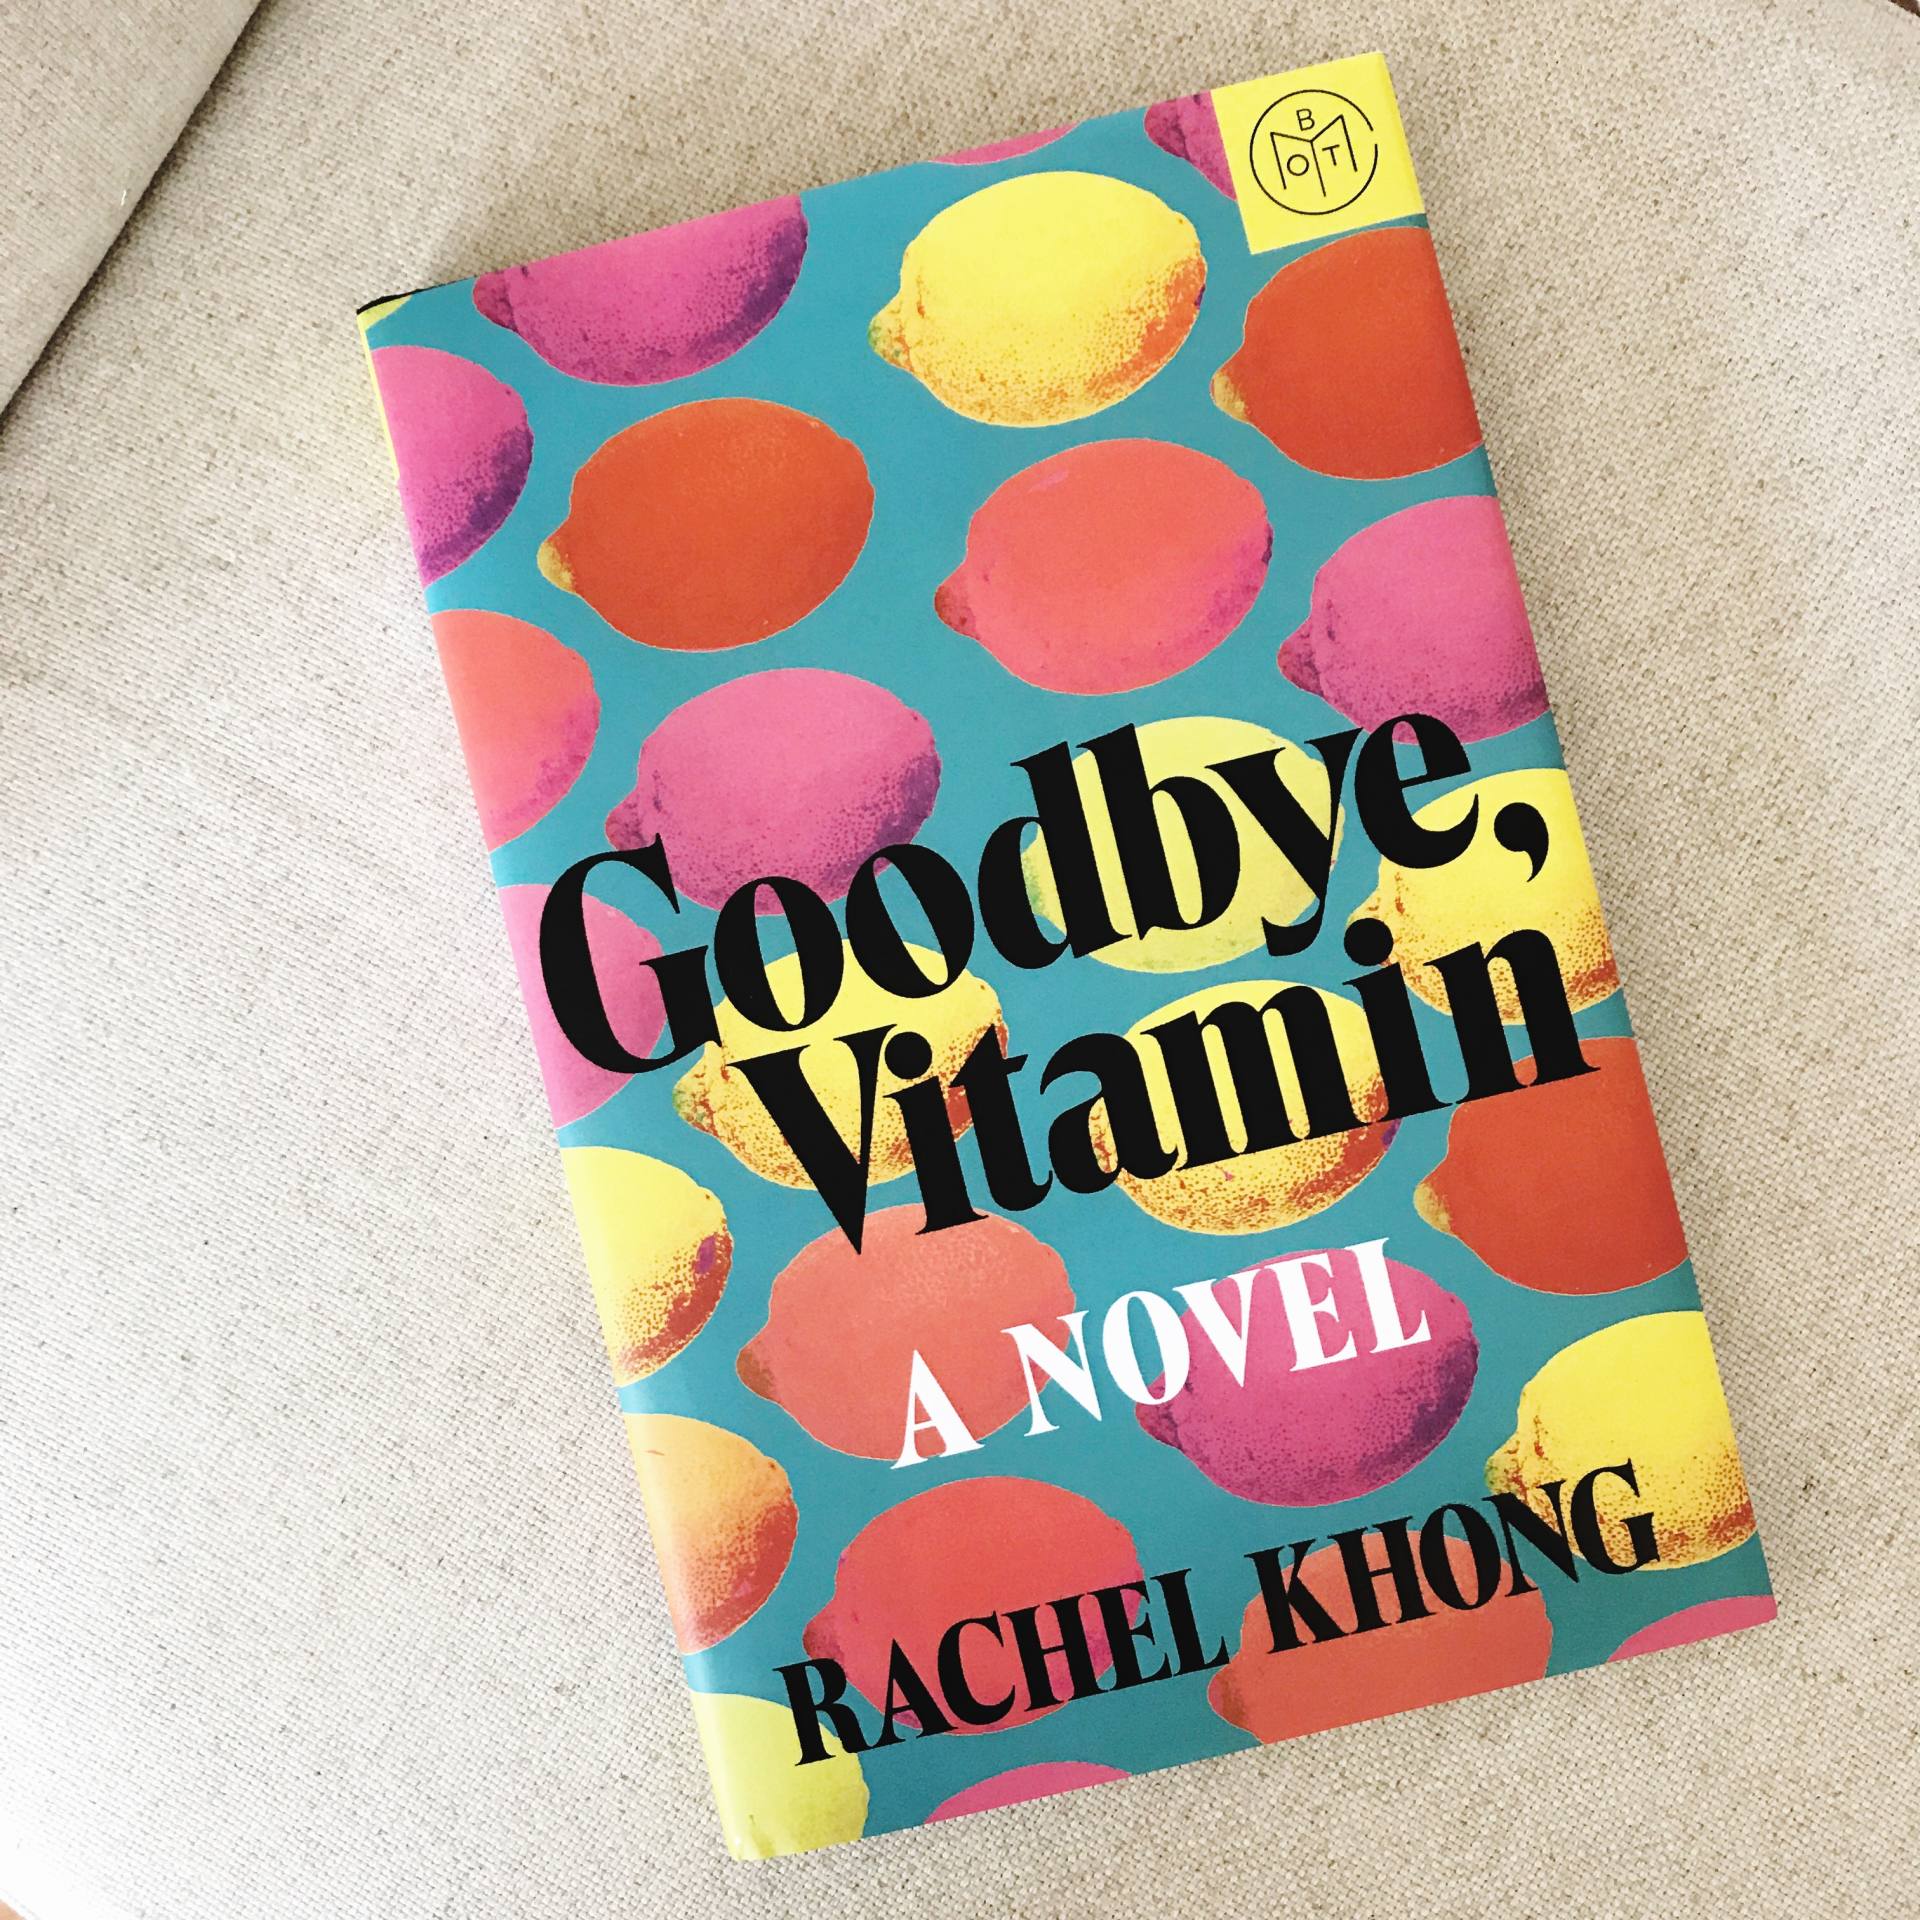 goodbye vitamin by rachel khong